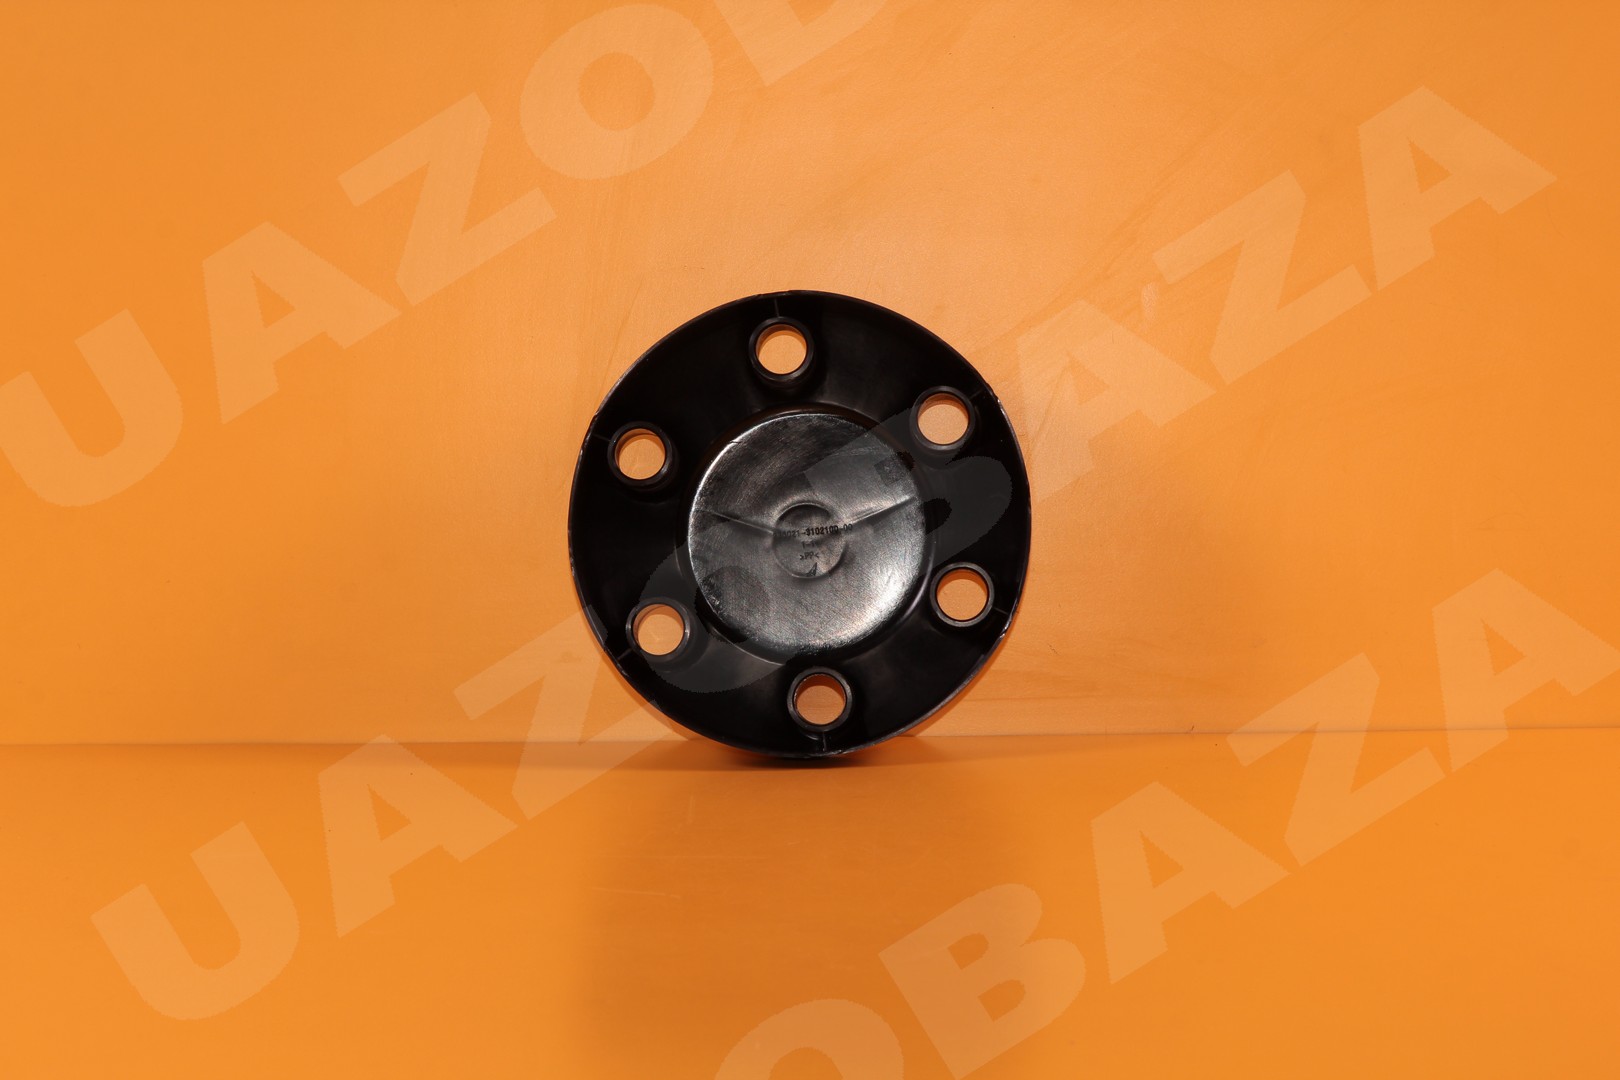  диска колеса (УАЗ-236021, 236022 Профи) пластик, под .